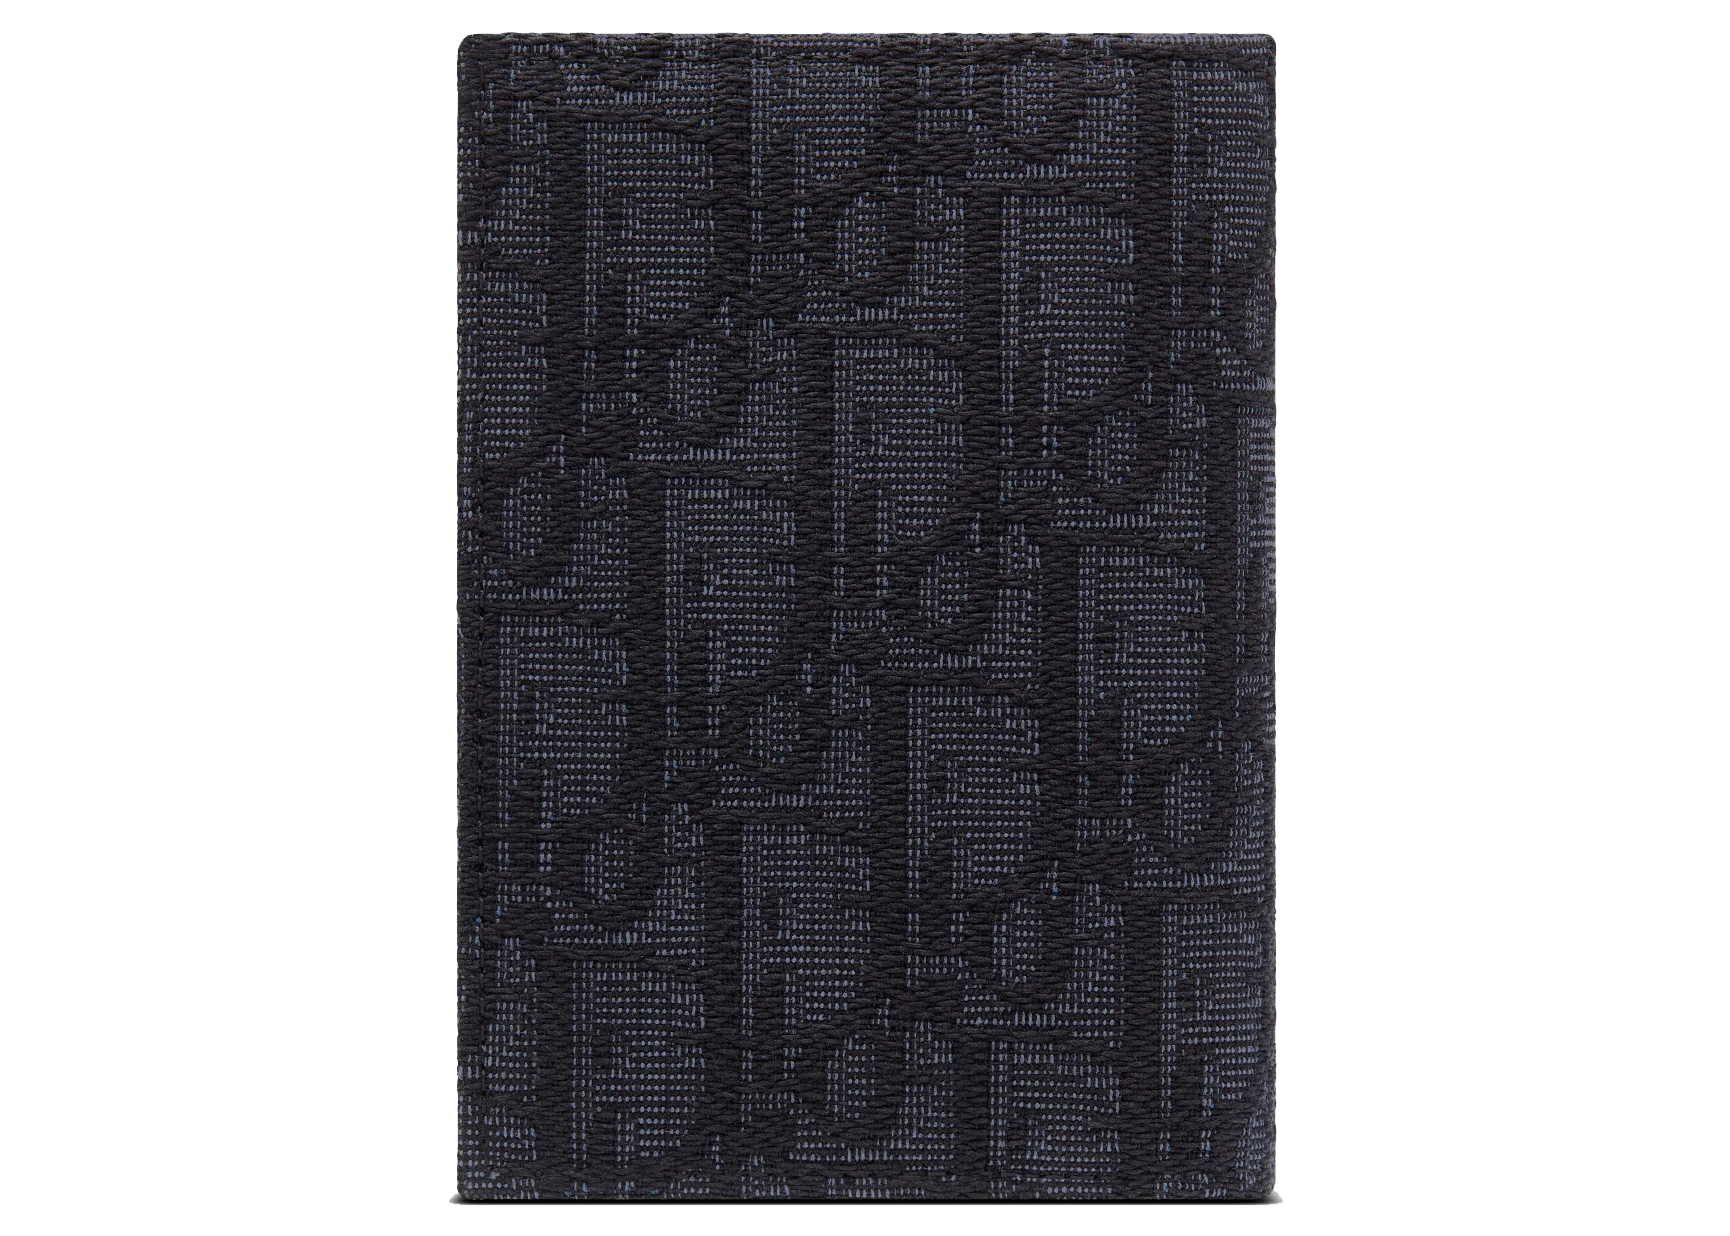 Dior Compact Wallet Oblique Jacquard Black